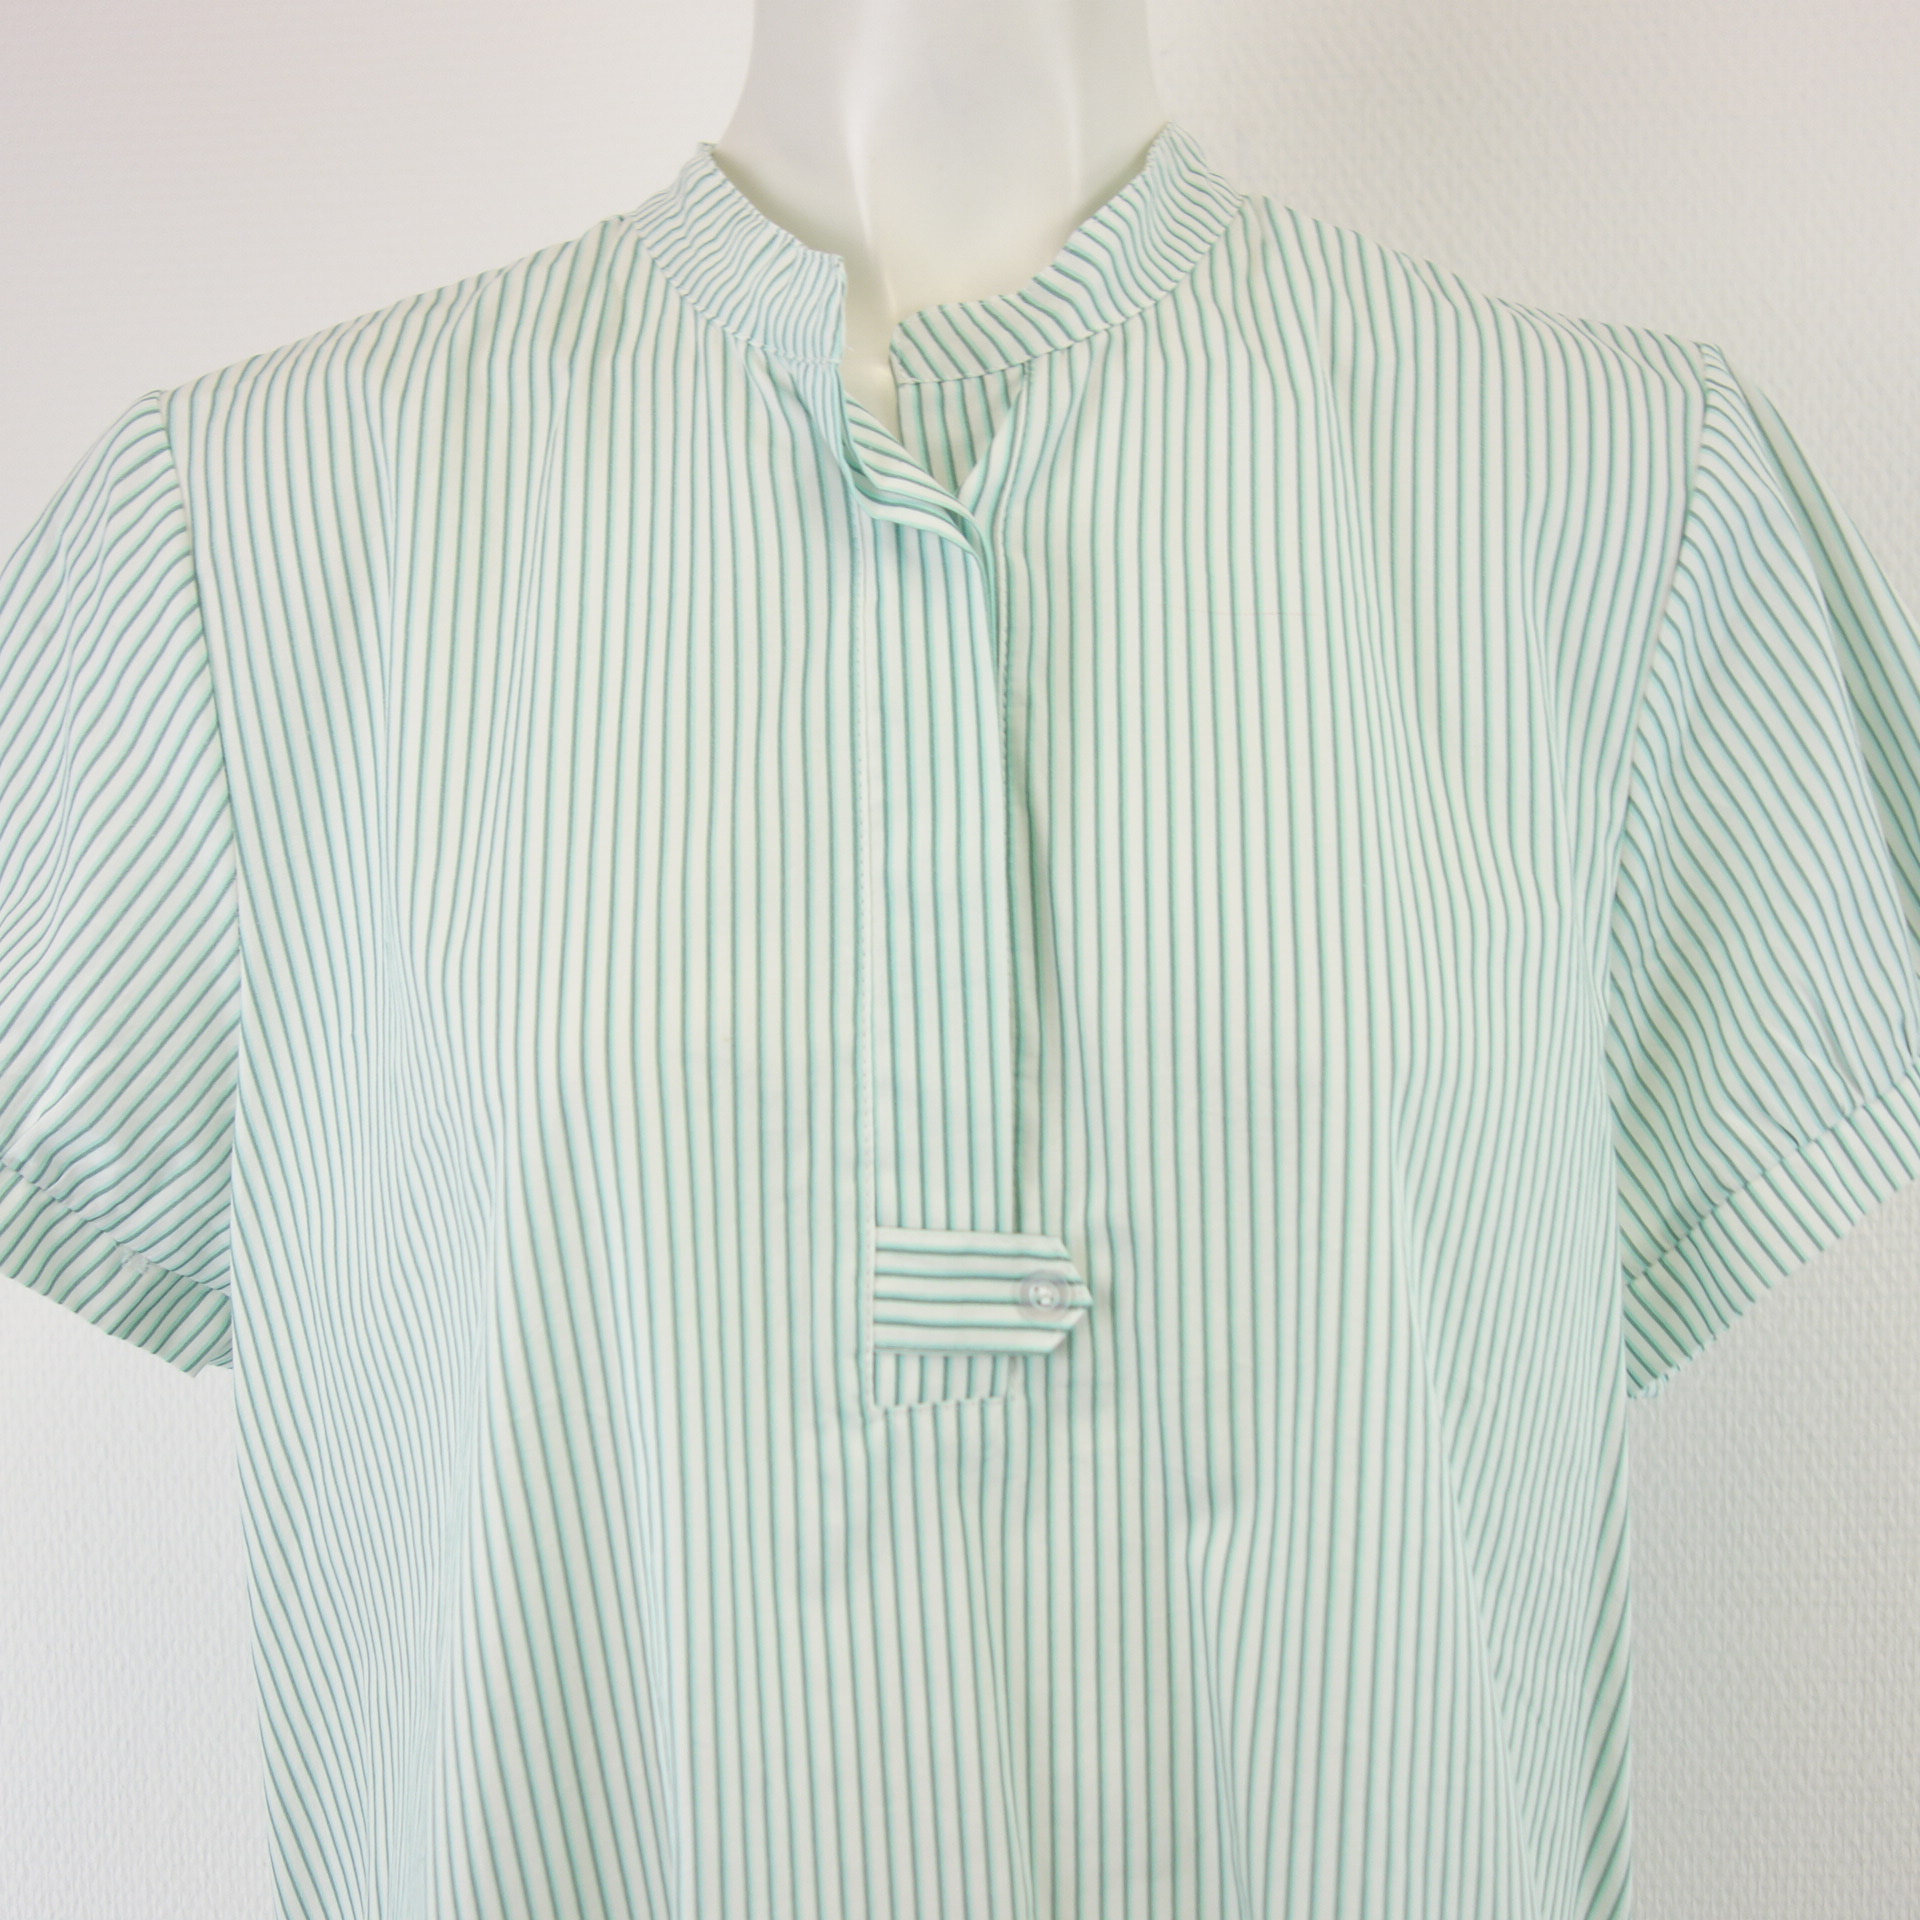 TIFFANY Dänemark Damen Bluse Hemd Tunika Shirt Weiß Grün Baumwolle Größe S / M